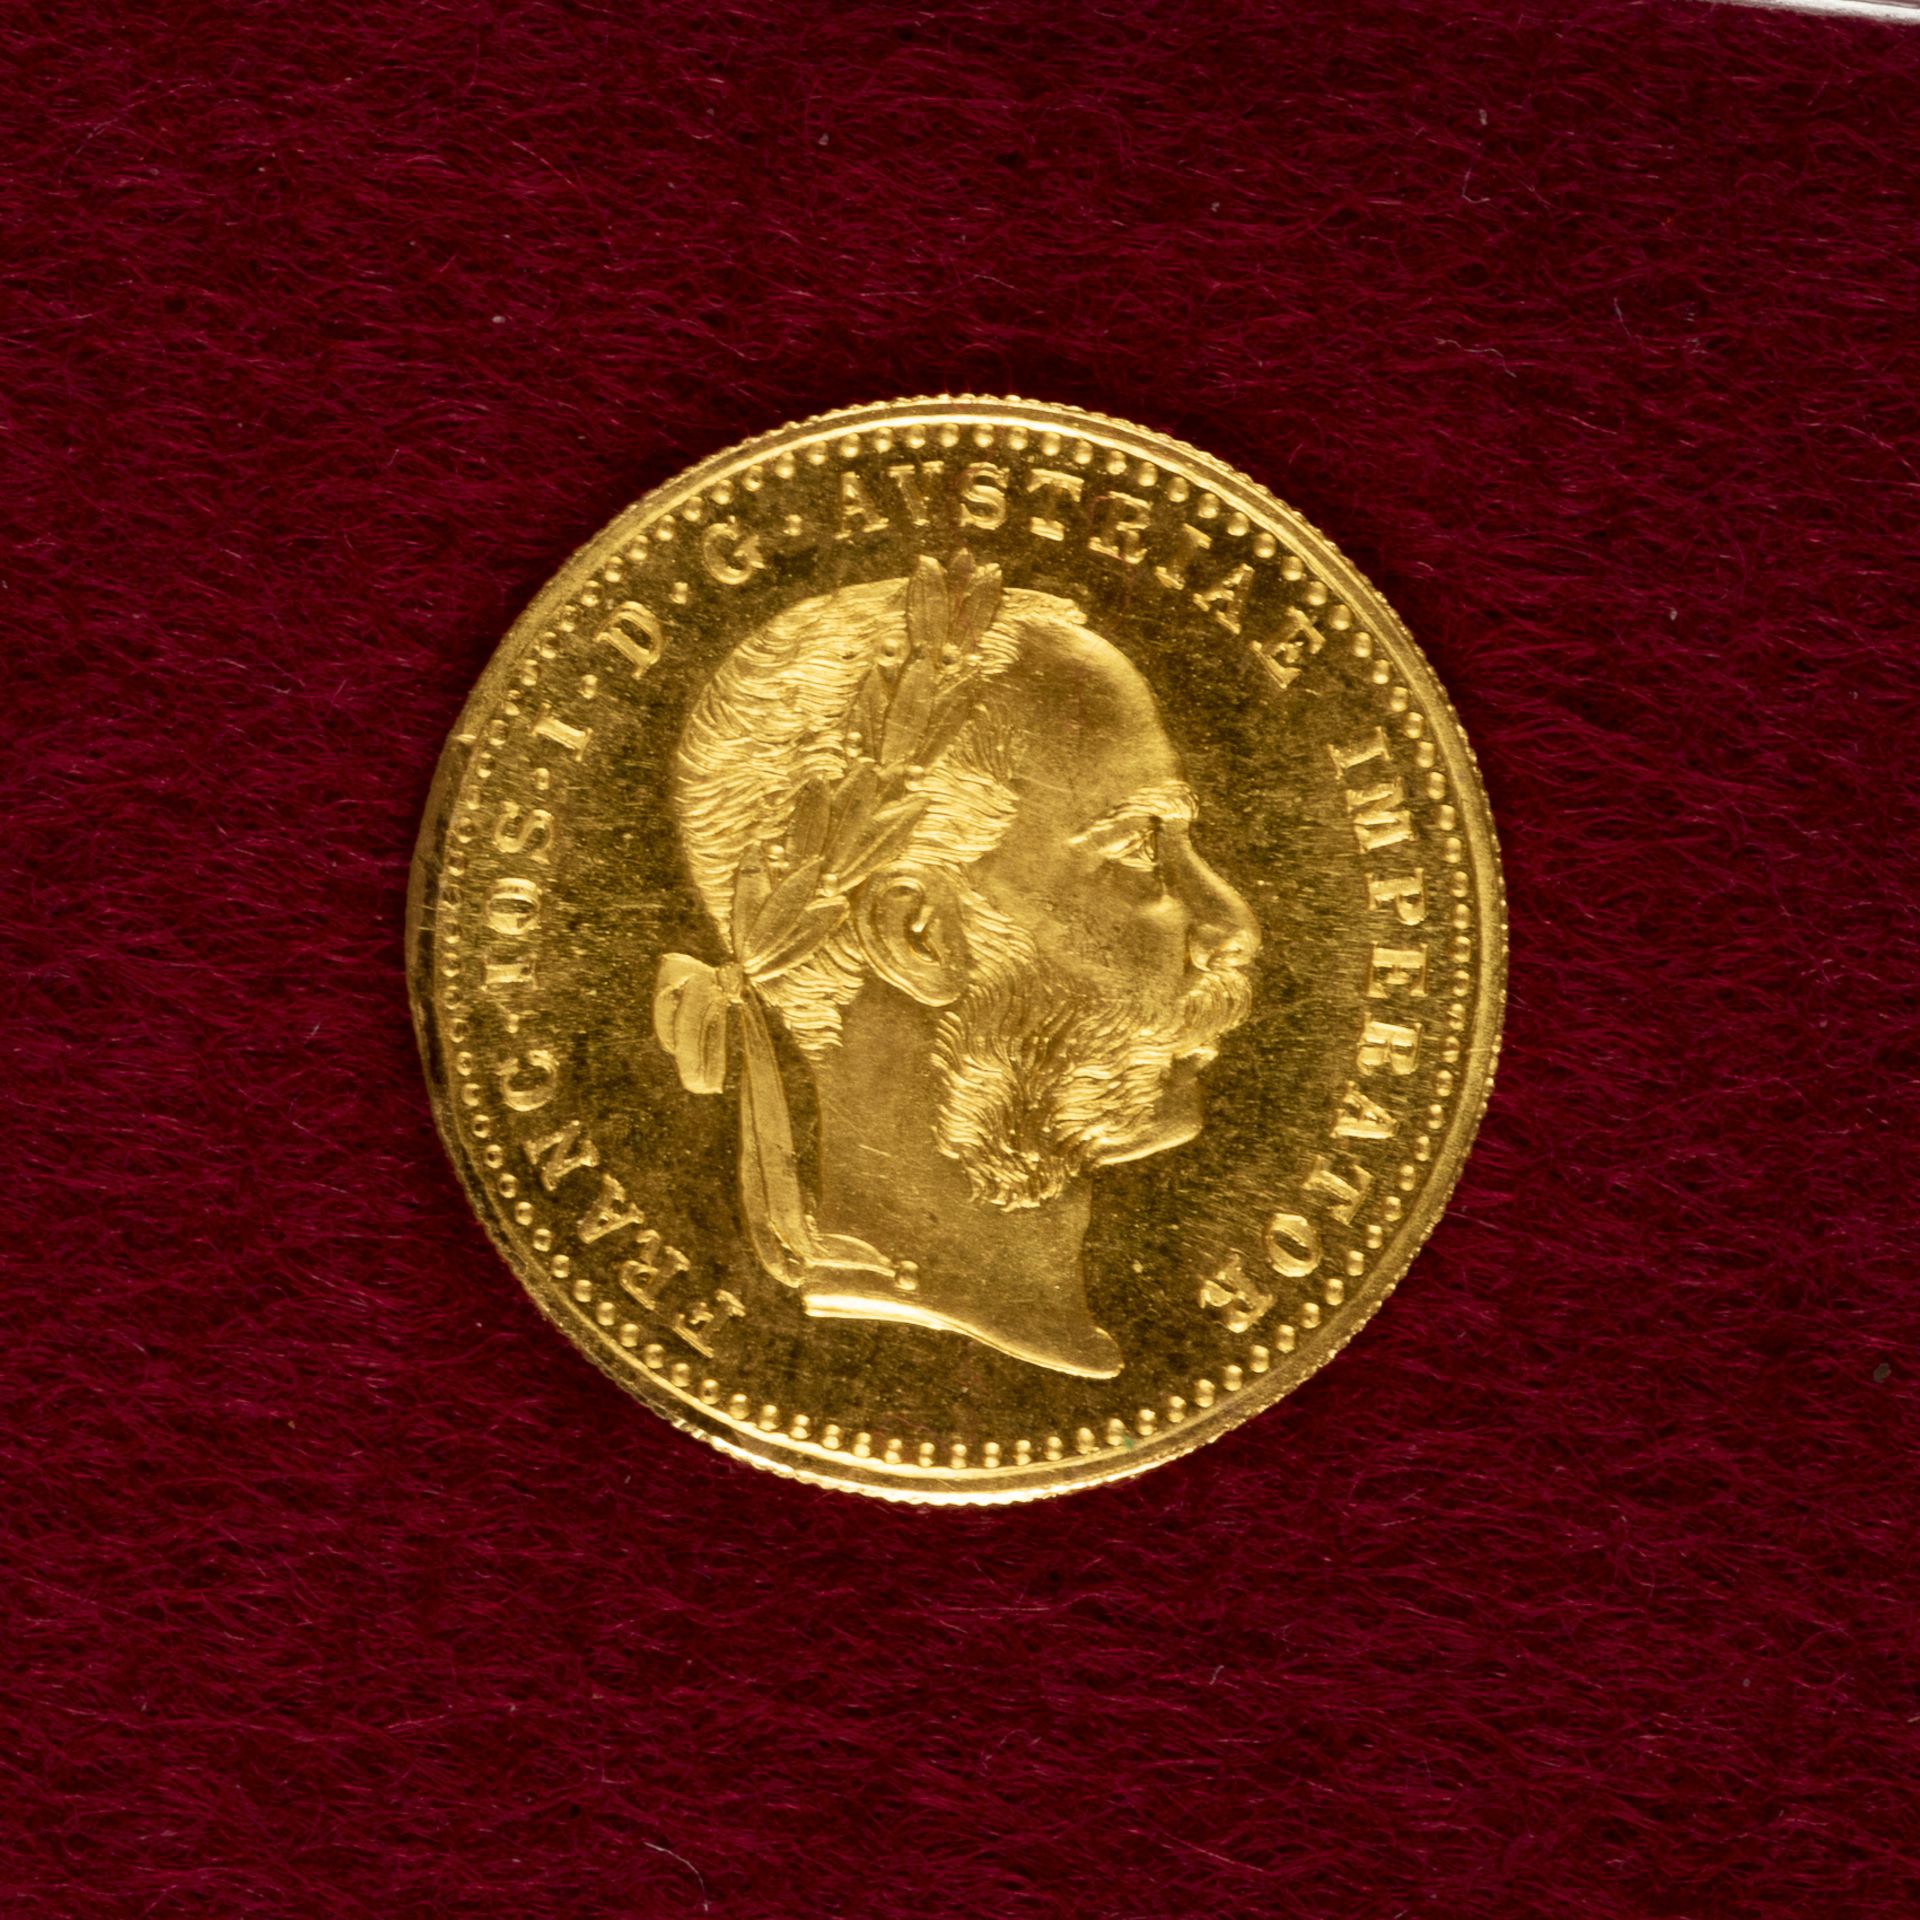 Goldmünze, 1 Dukat, Österreich 1915, Franz Joseph I. - Image 2 of 2